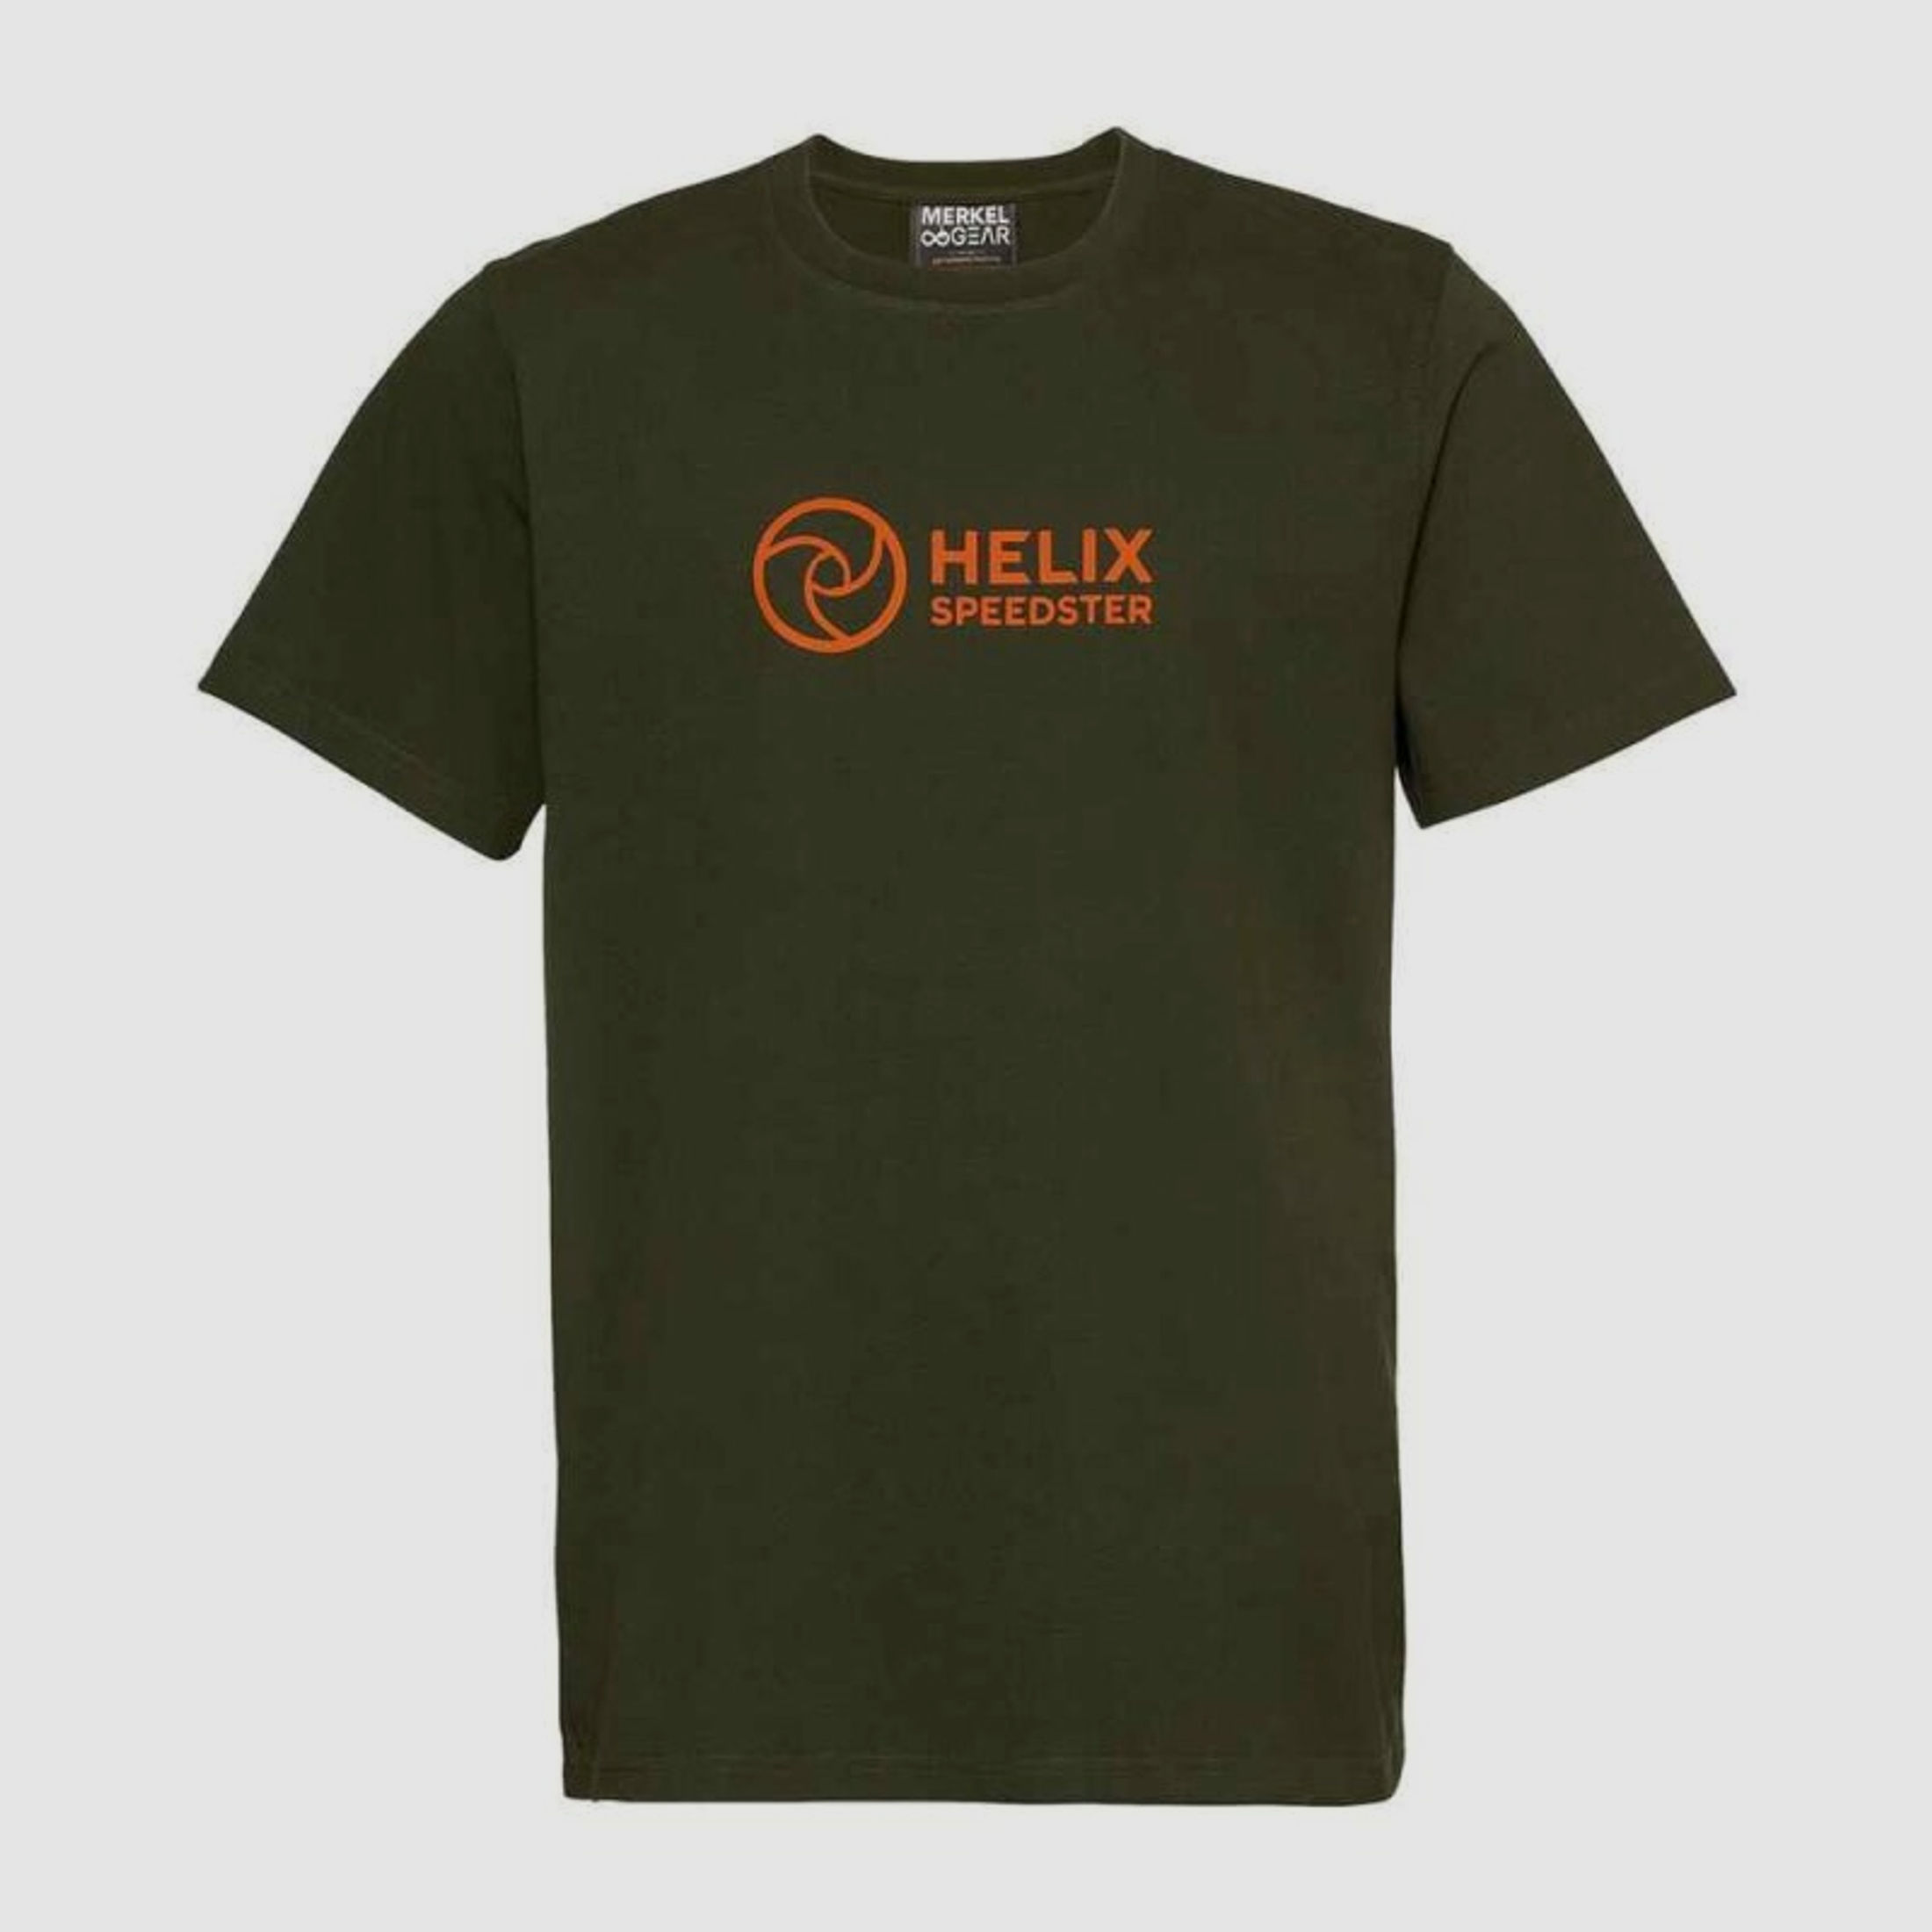 MERKEL GEAR® Driven Hunt T-Shirt